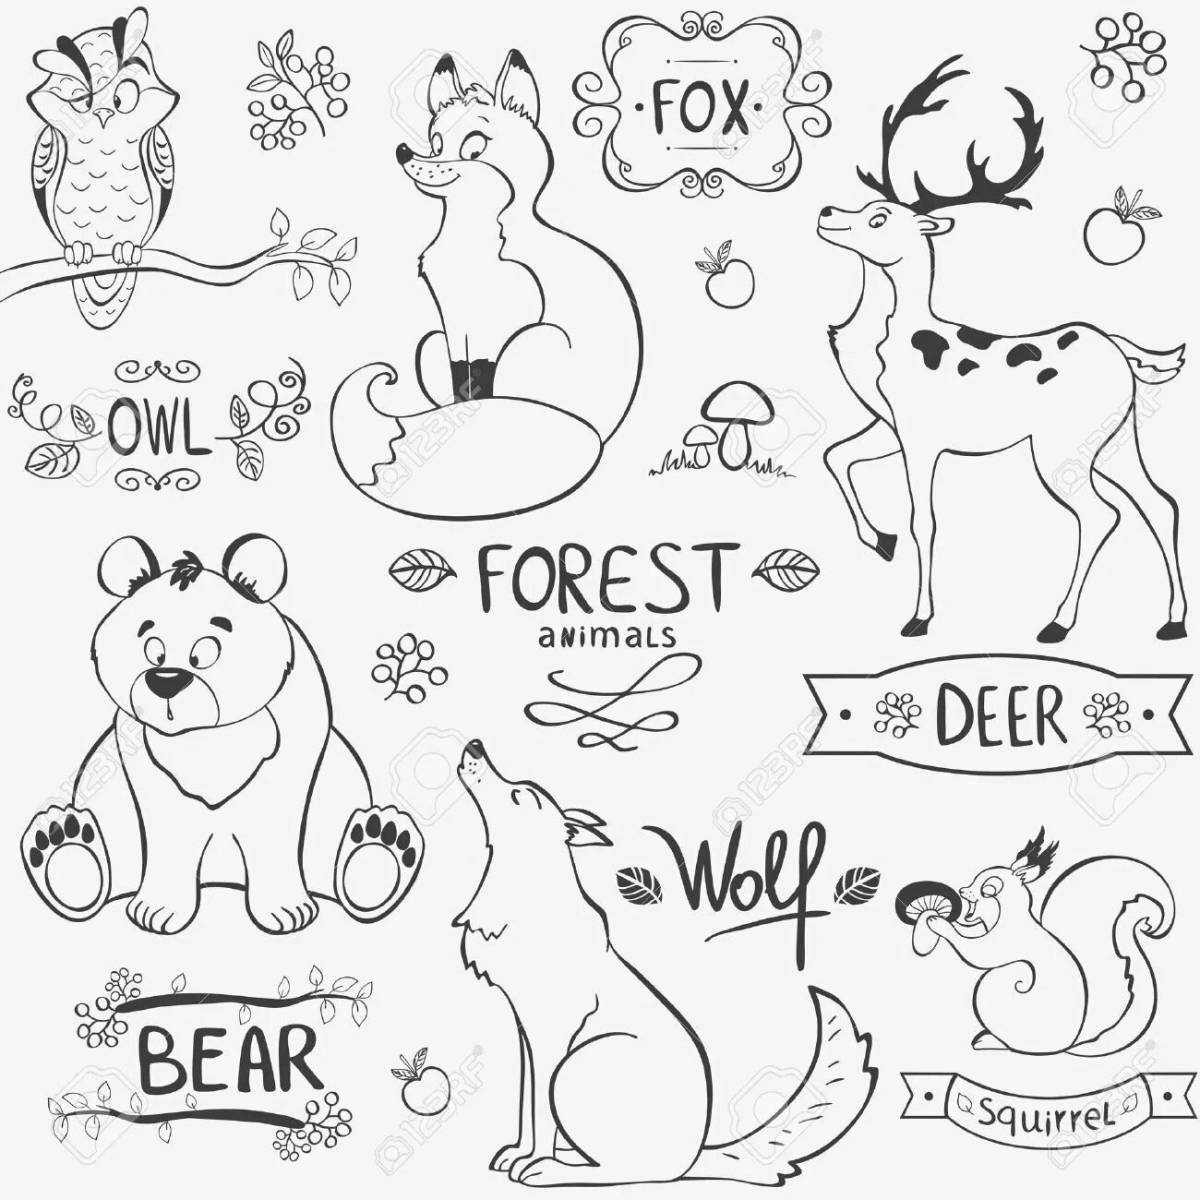 Playful English animal coloring for kids